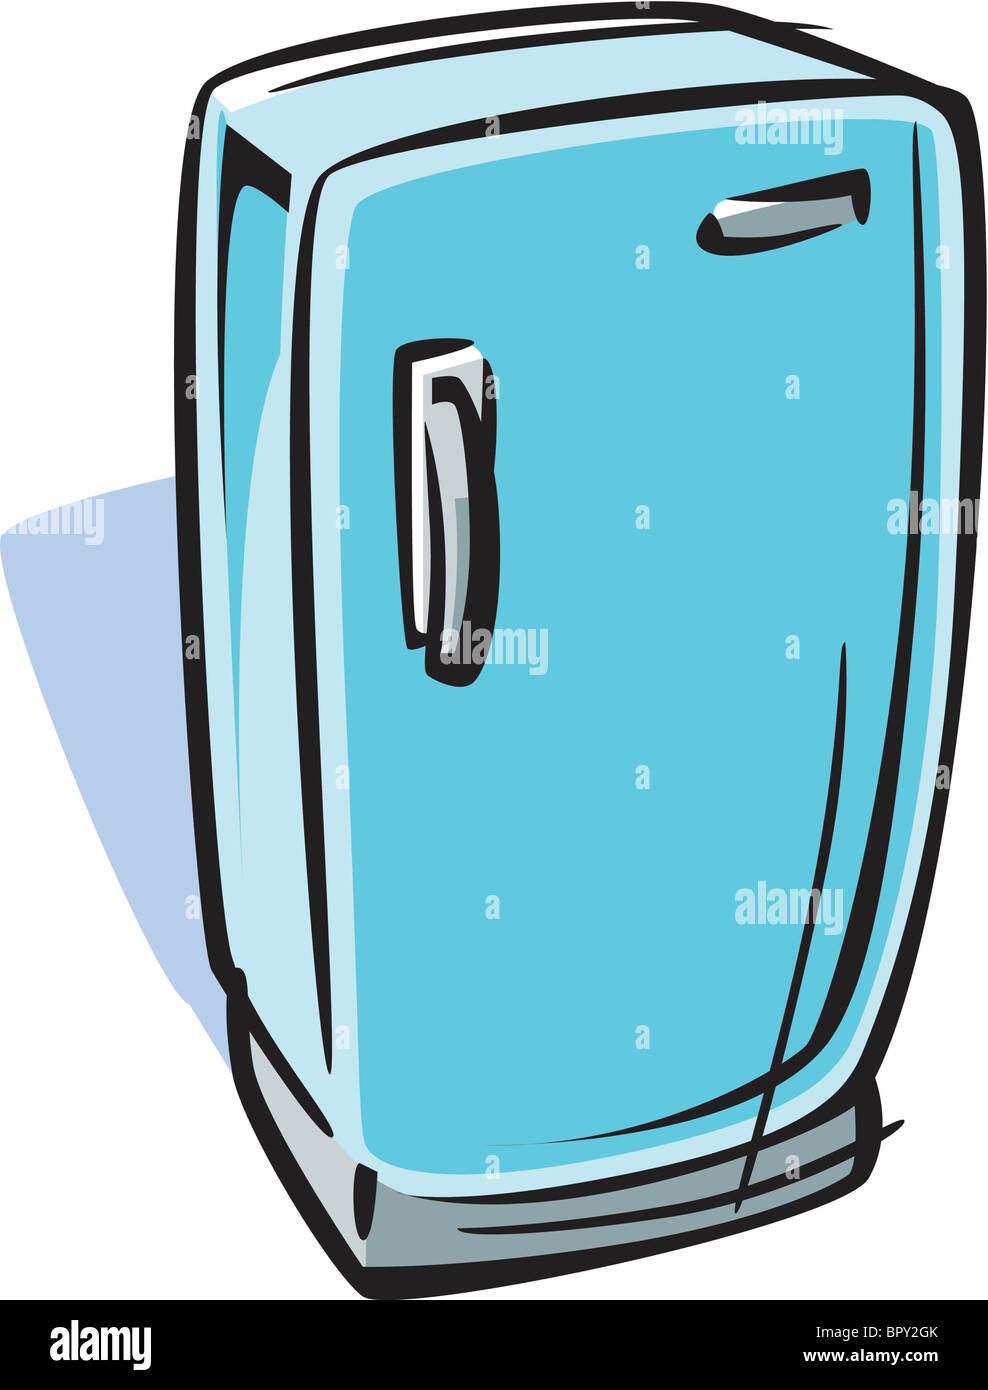 Cartoon drawing of a refrigerator Stock Photo - Alamy